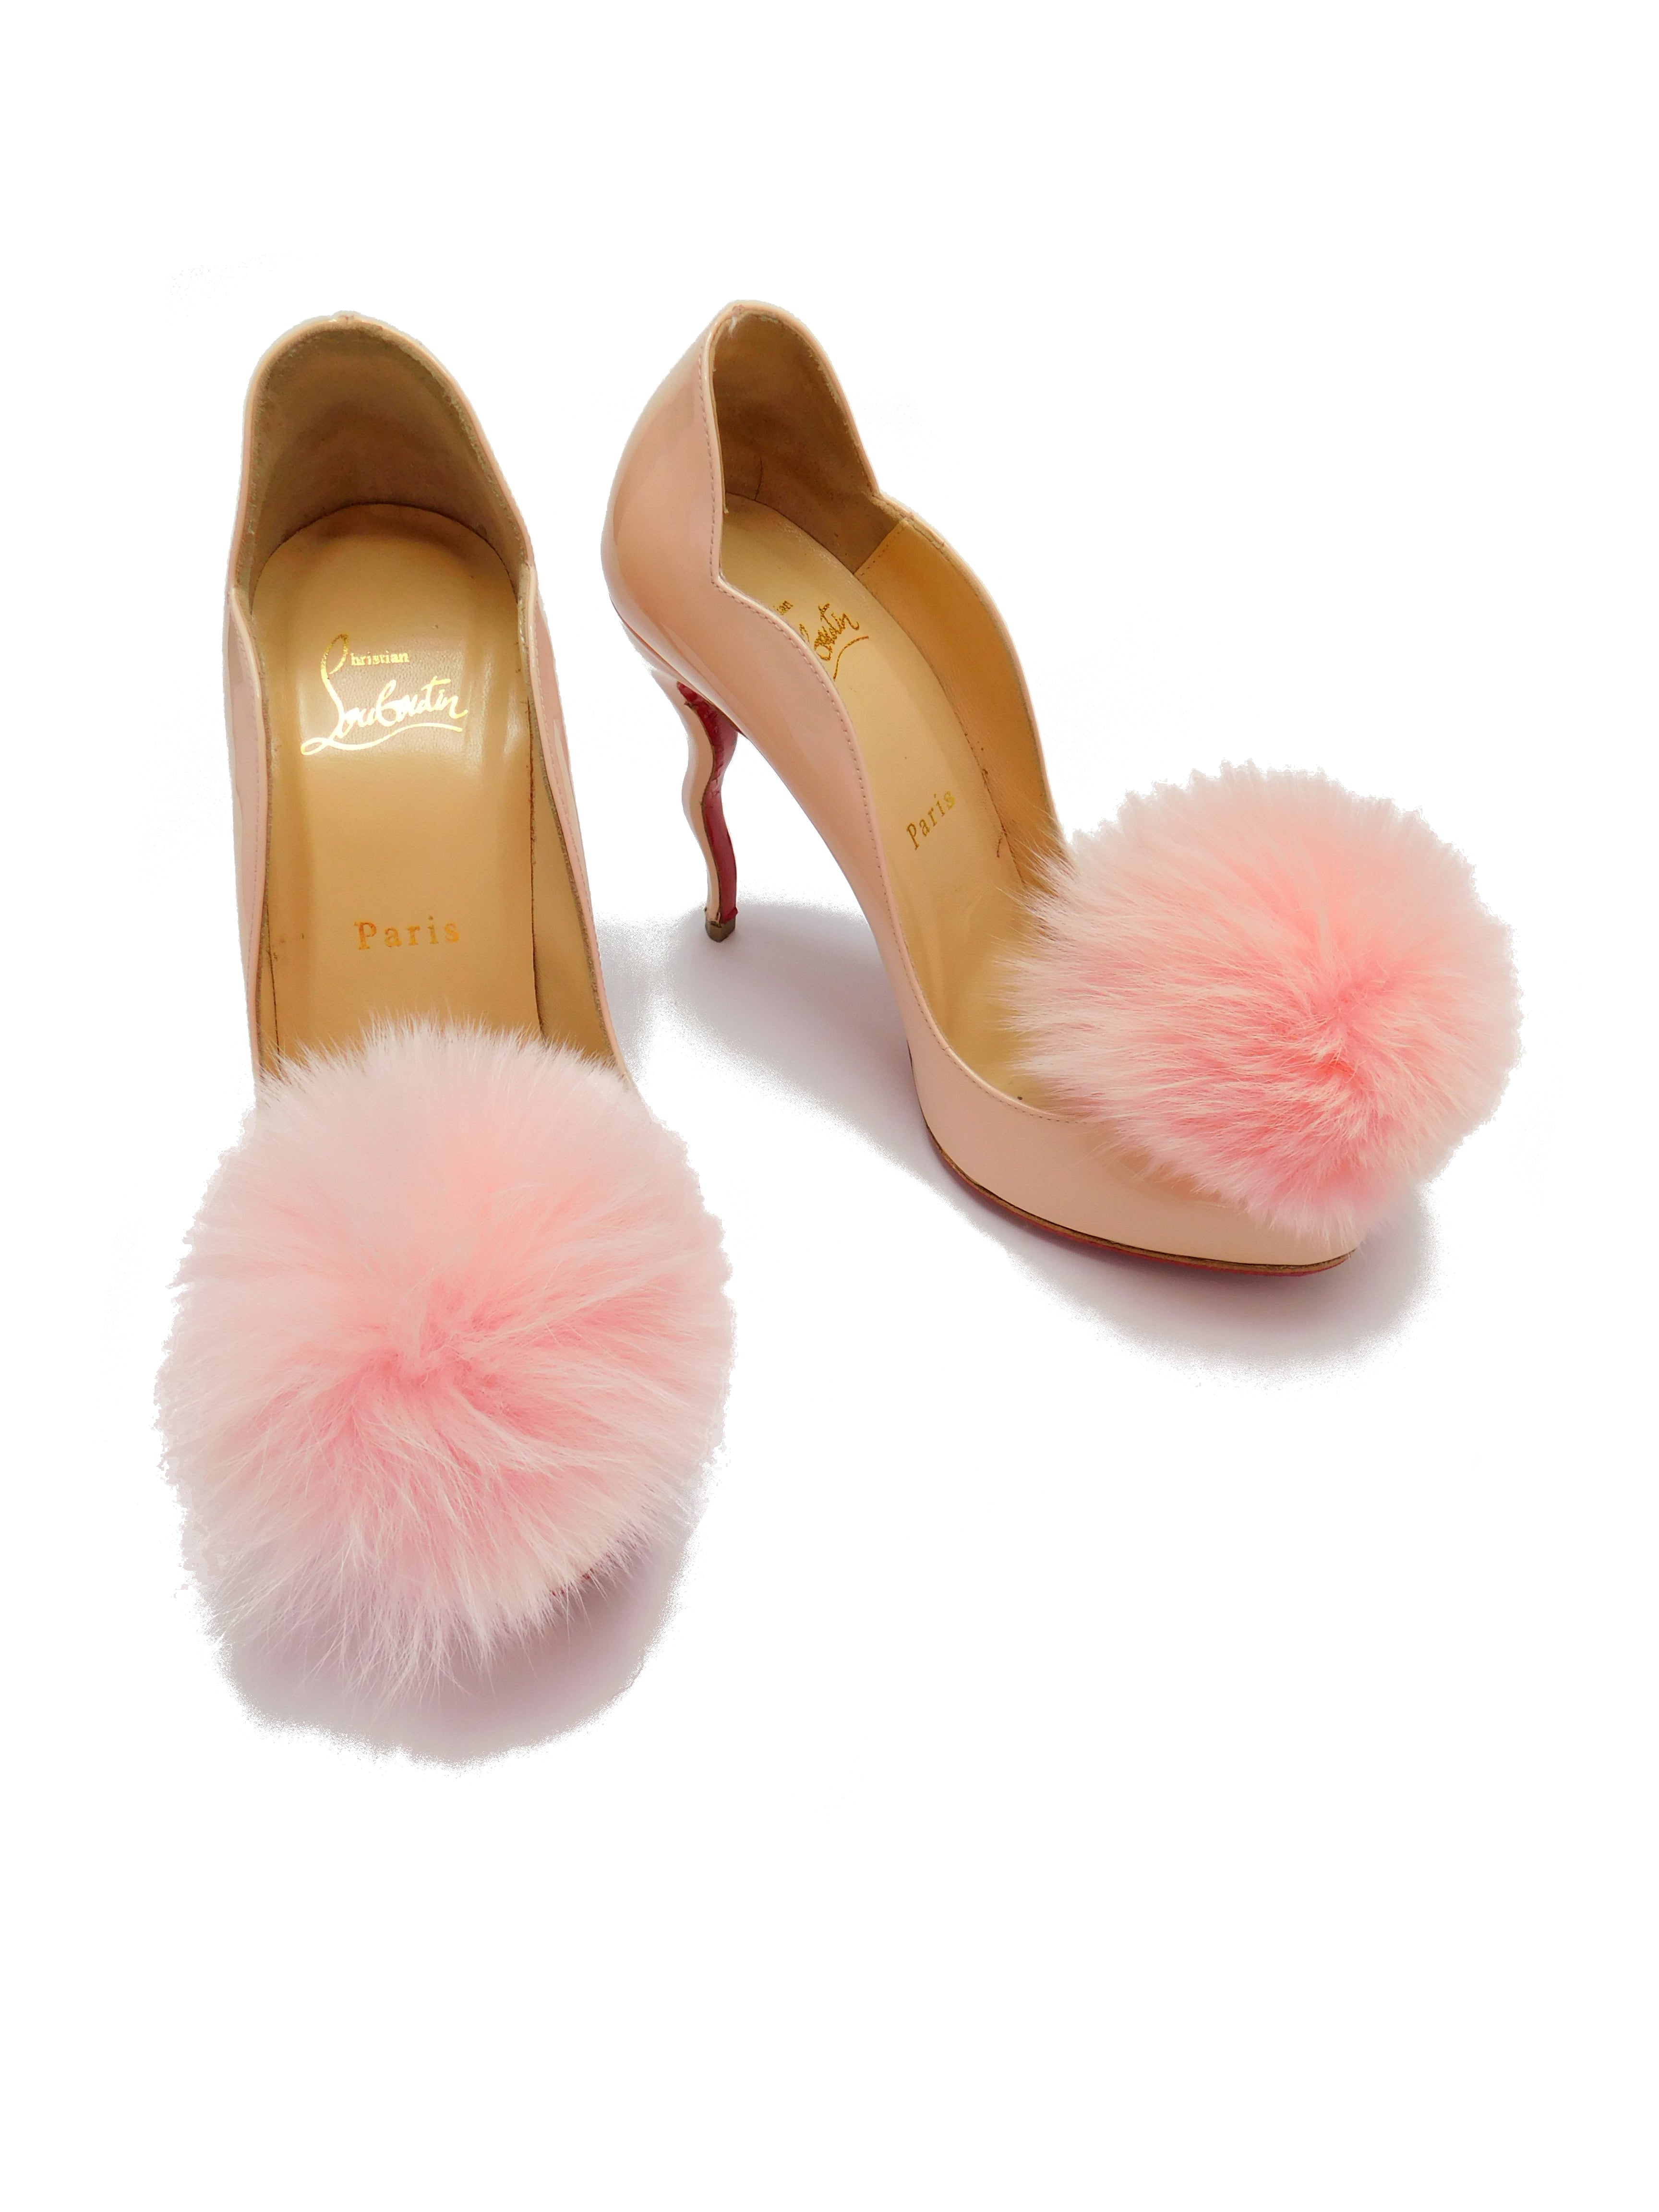 Fur Pom Pom Shoe Clips -